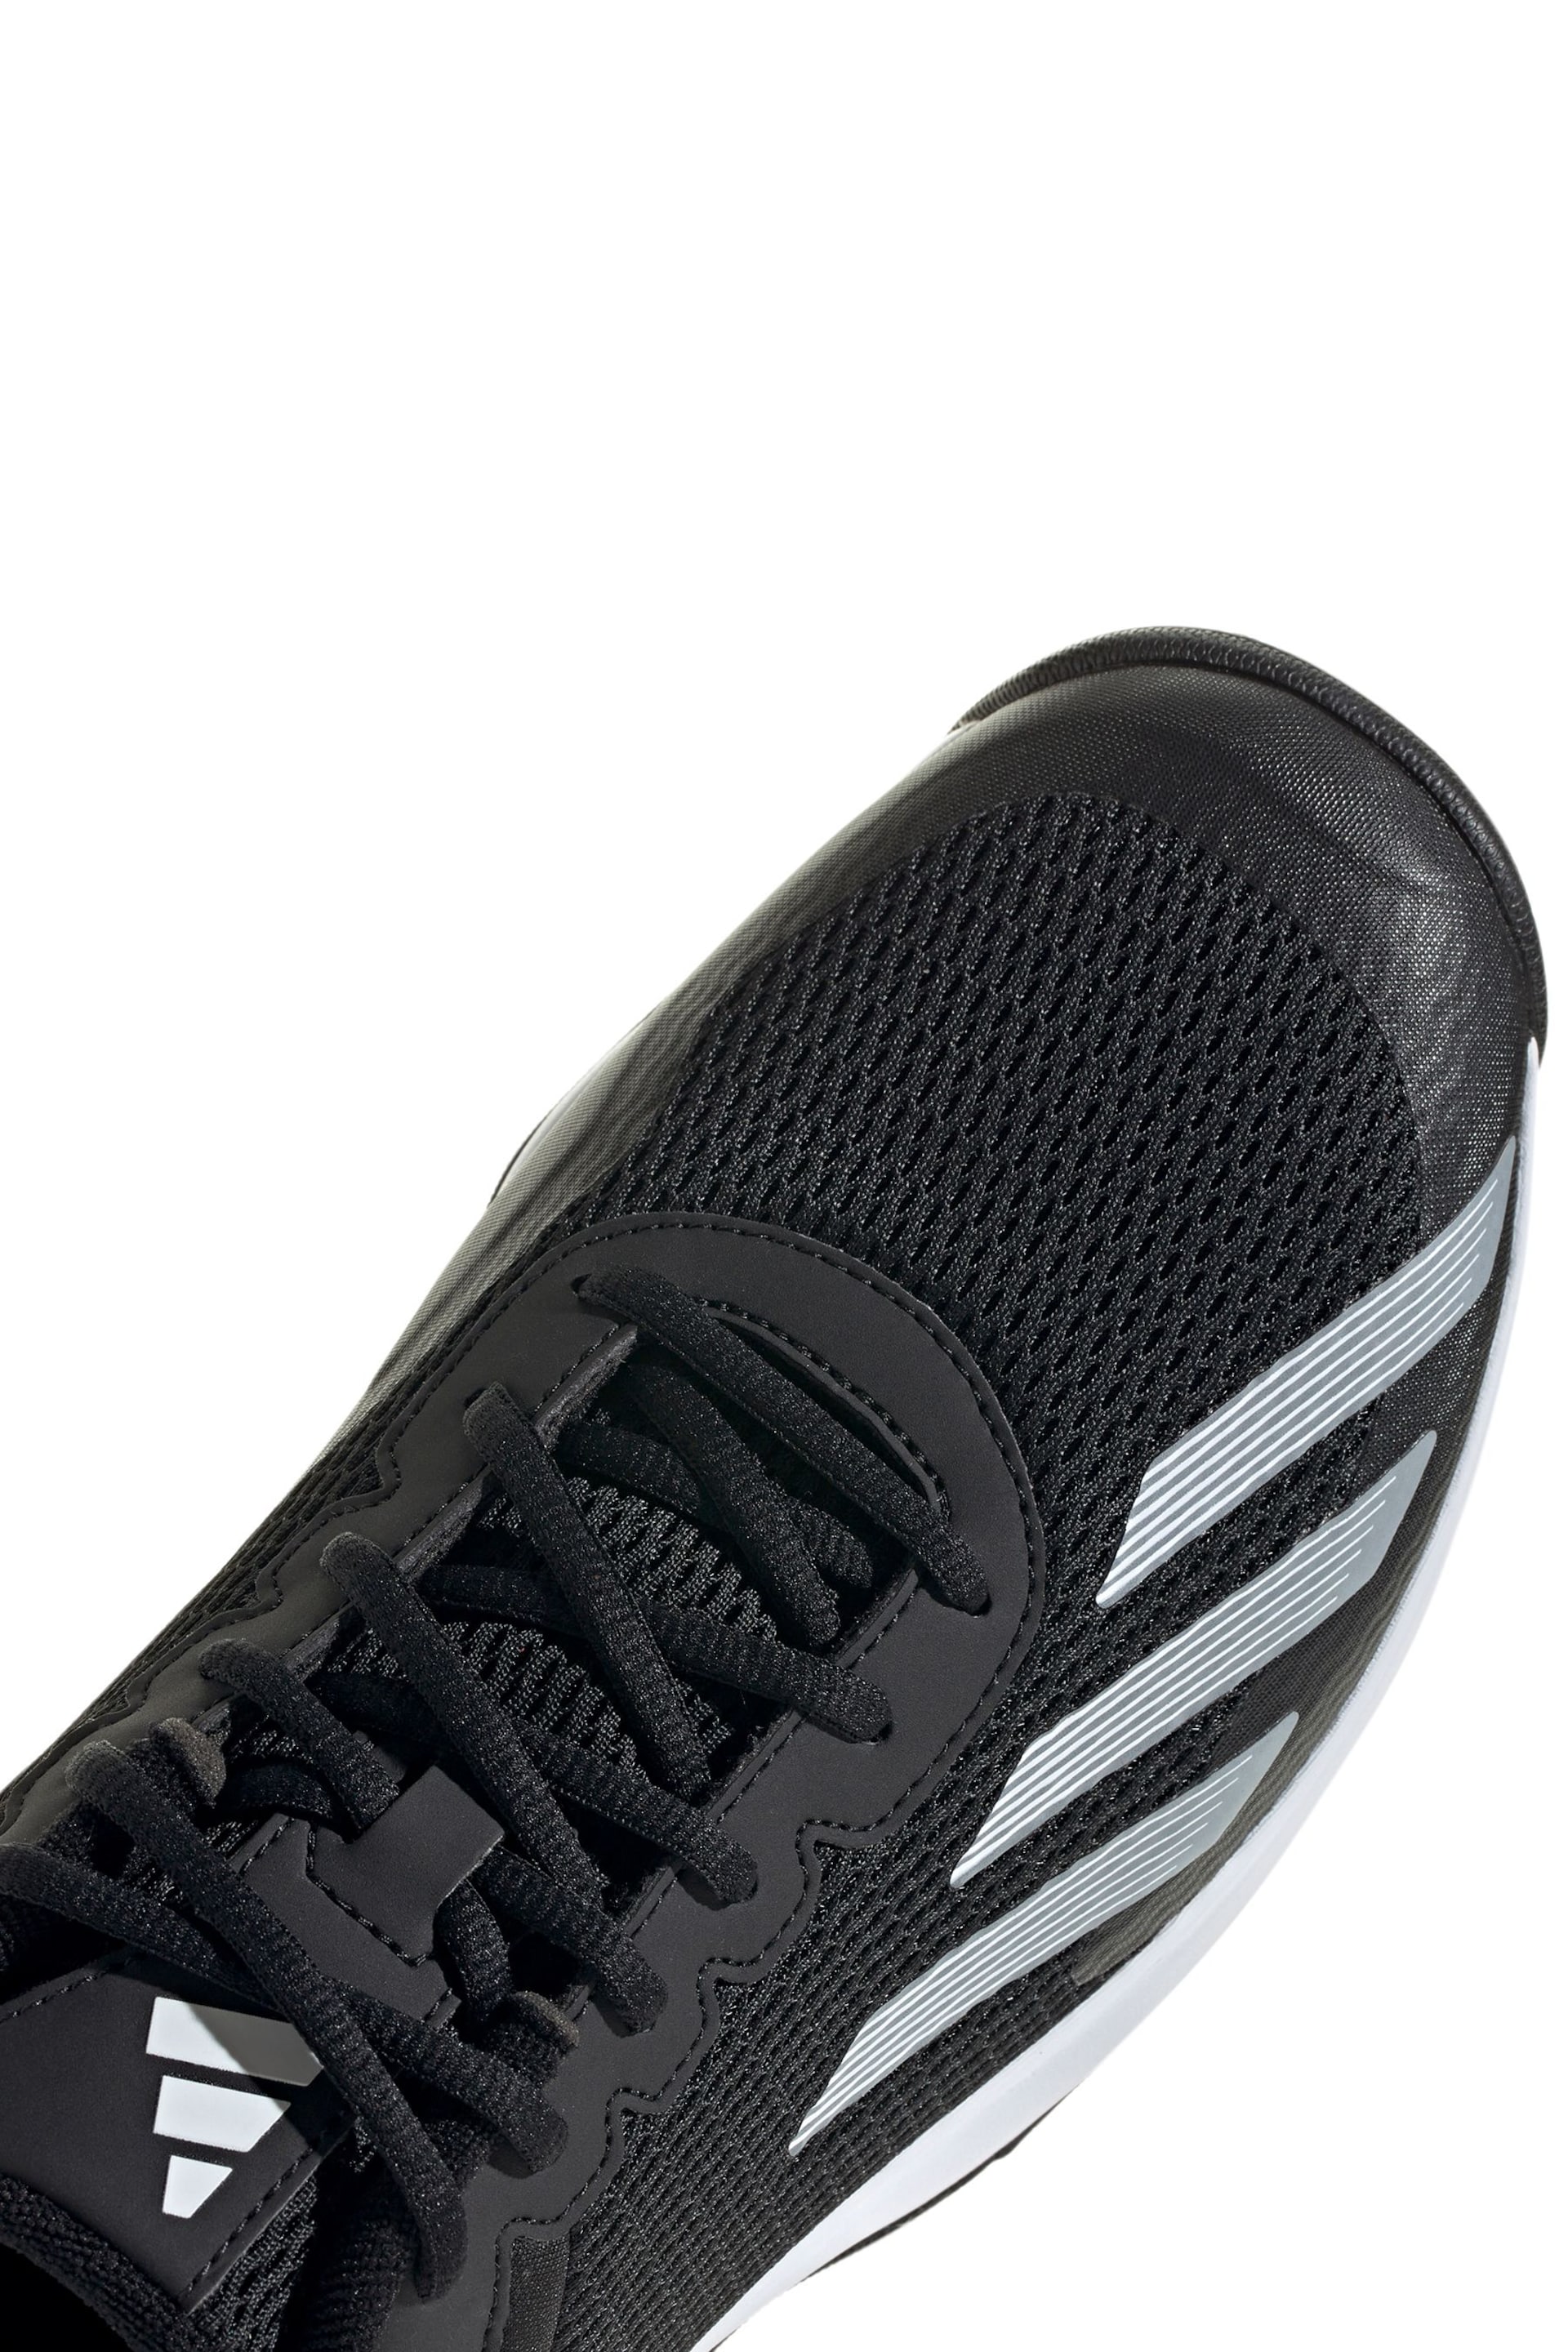 adidas Black/Grey Courtflash Speed Tennis Shoes - Image 7 of 7